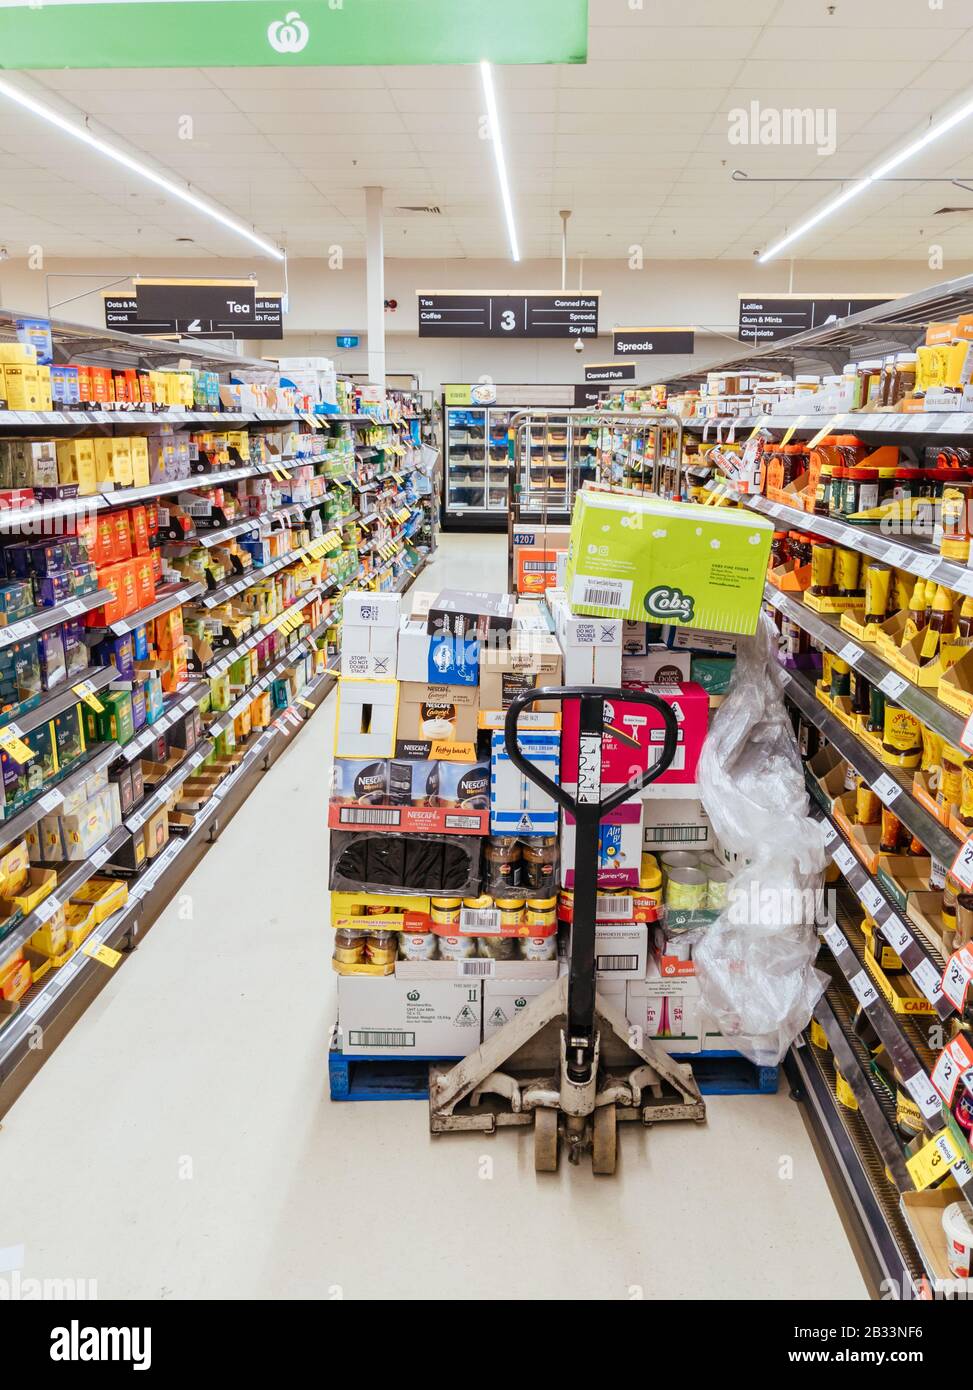 Panic Buying at Australian Supermarkets due to Corona Virus Fears Stock Photo